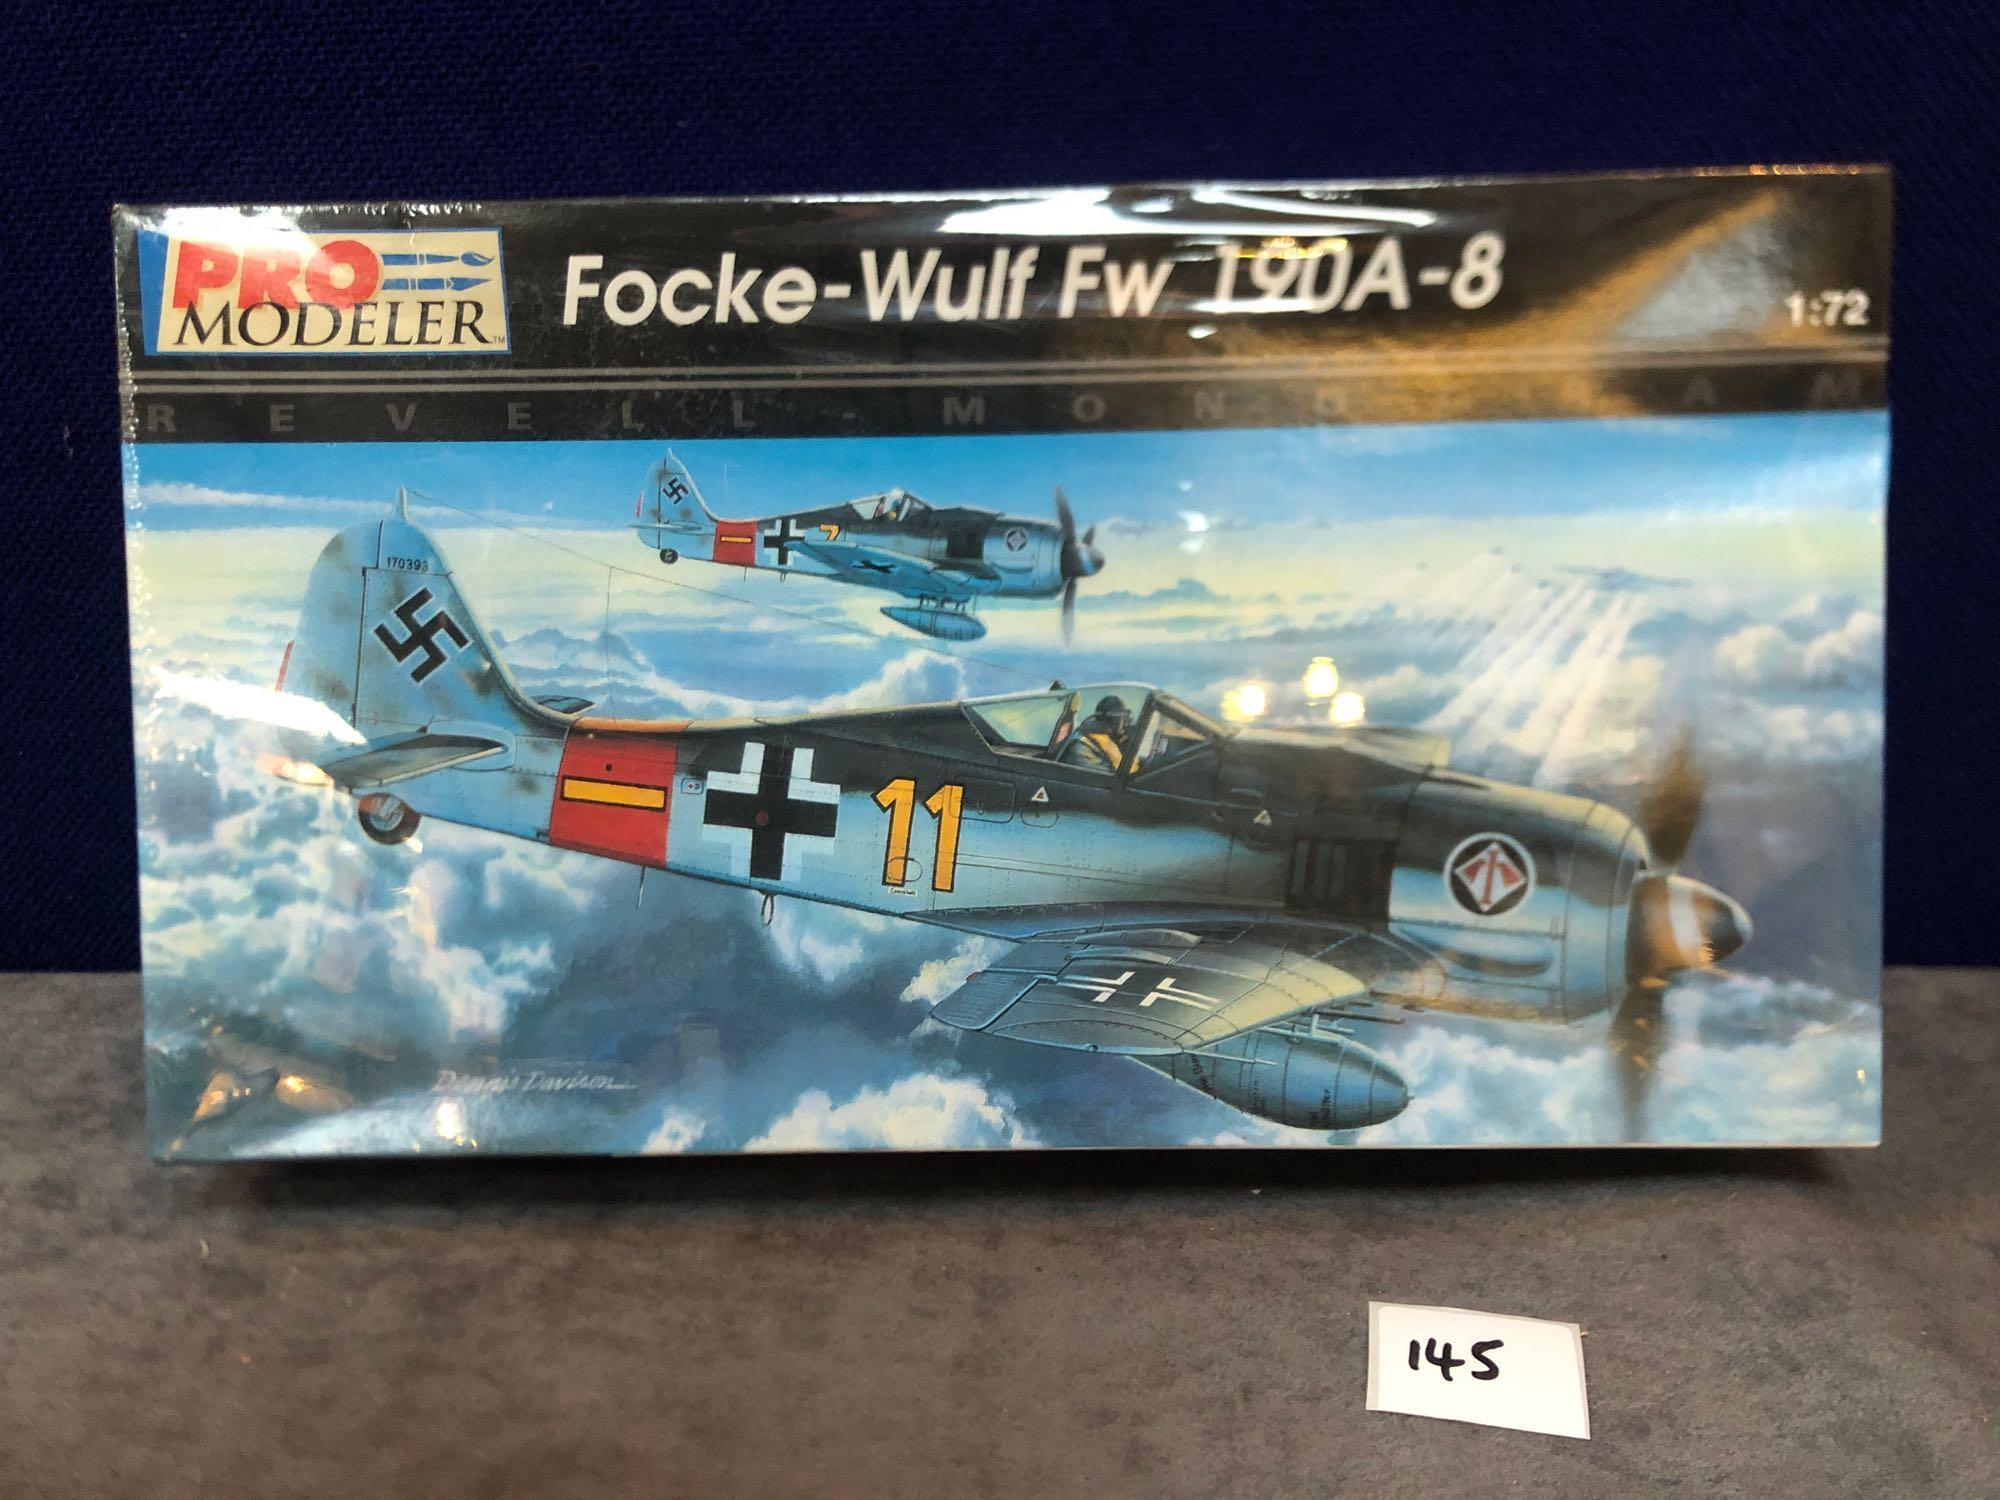 Revell-Monogram #85-5943 Pro Modeler Focke-Wulf FW 190A-8 1:72 scale released 1997 In sealed box